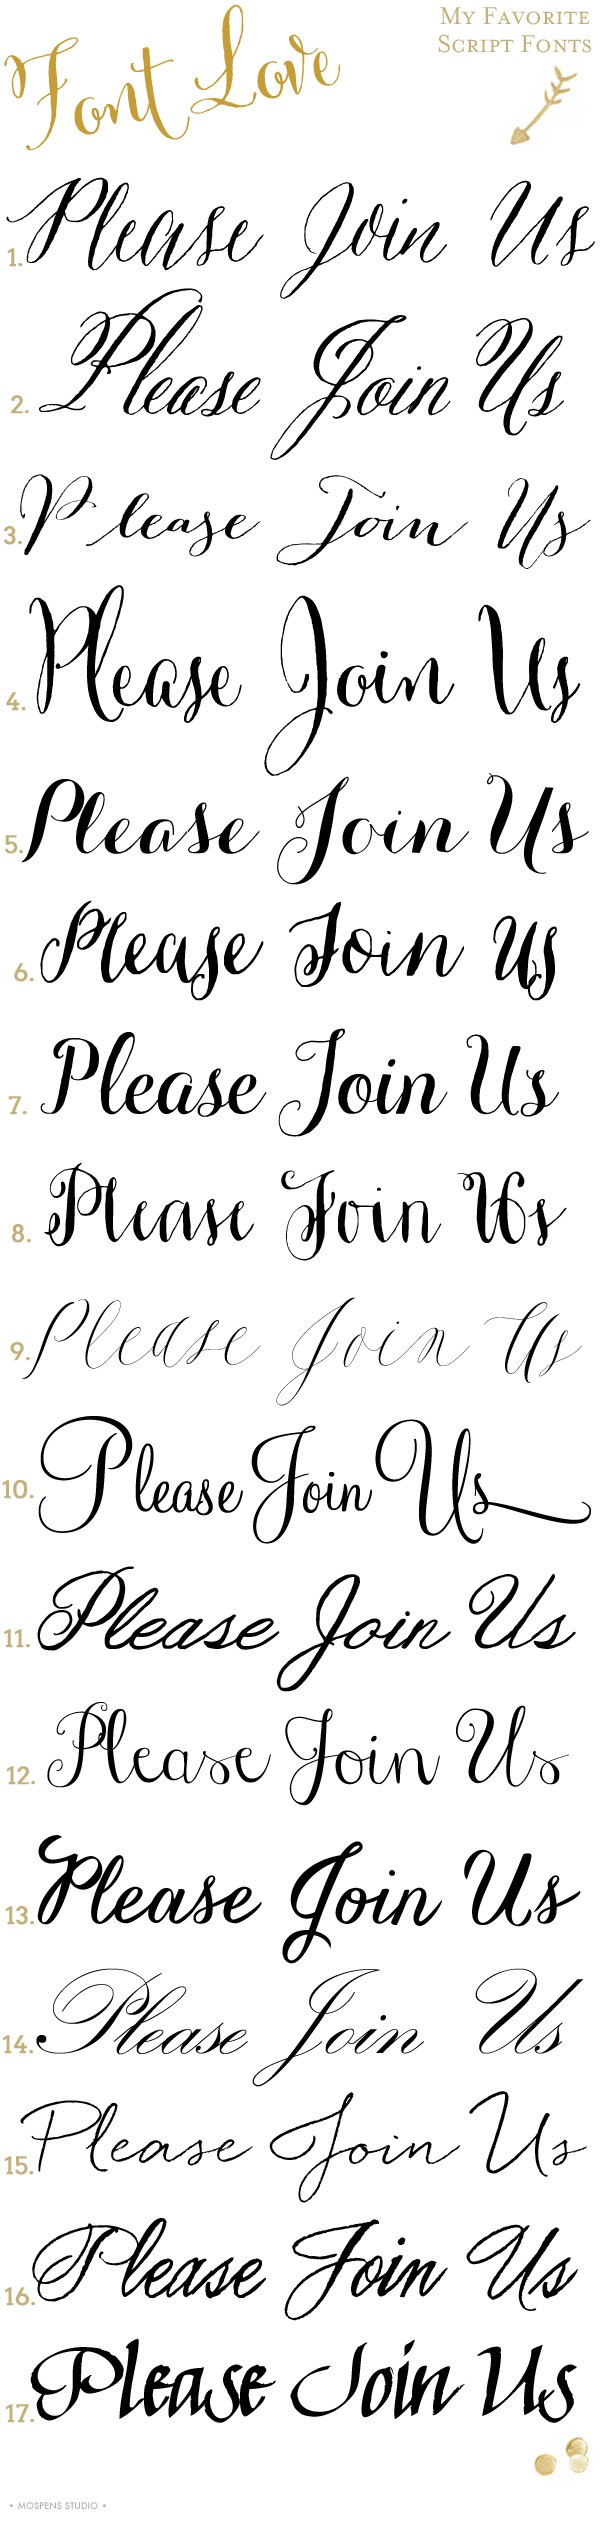 17 Script Fonts you will love for custom invitations by designer Michelle Mospens | www.mospensstudio.com